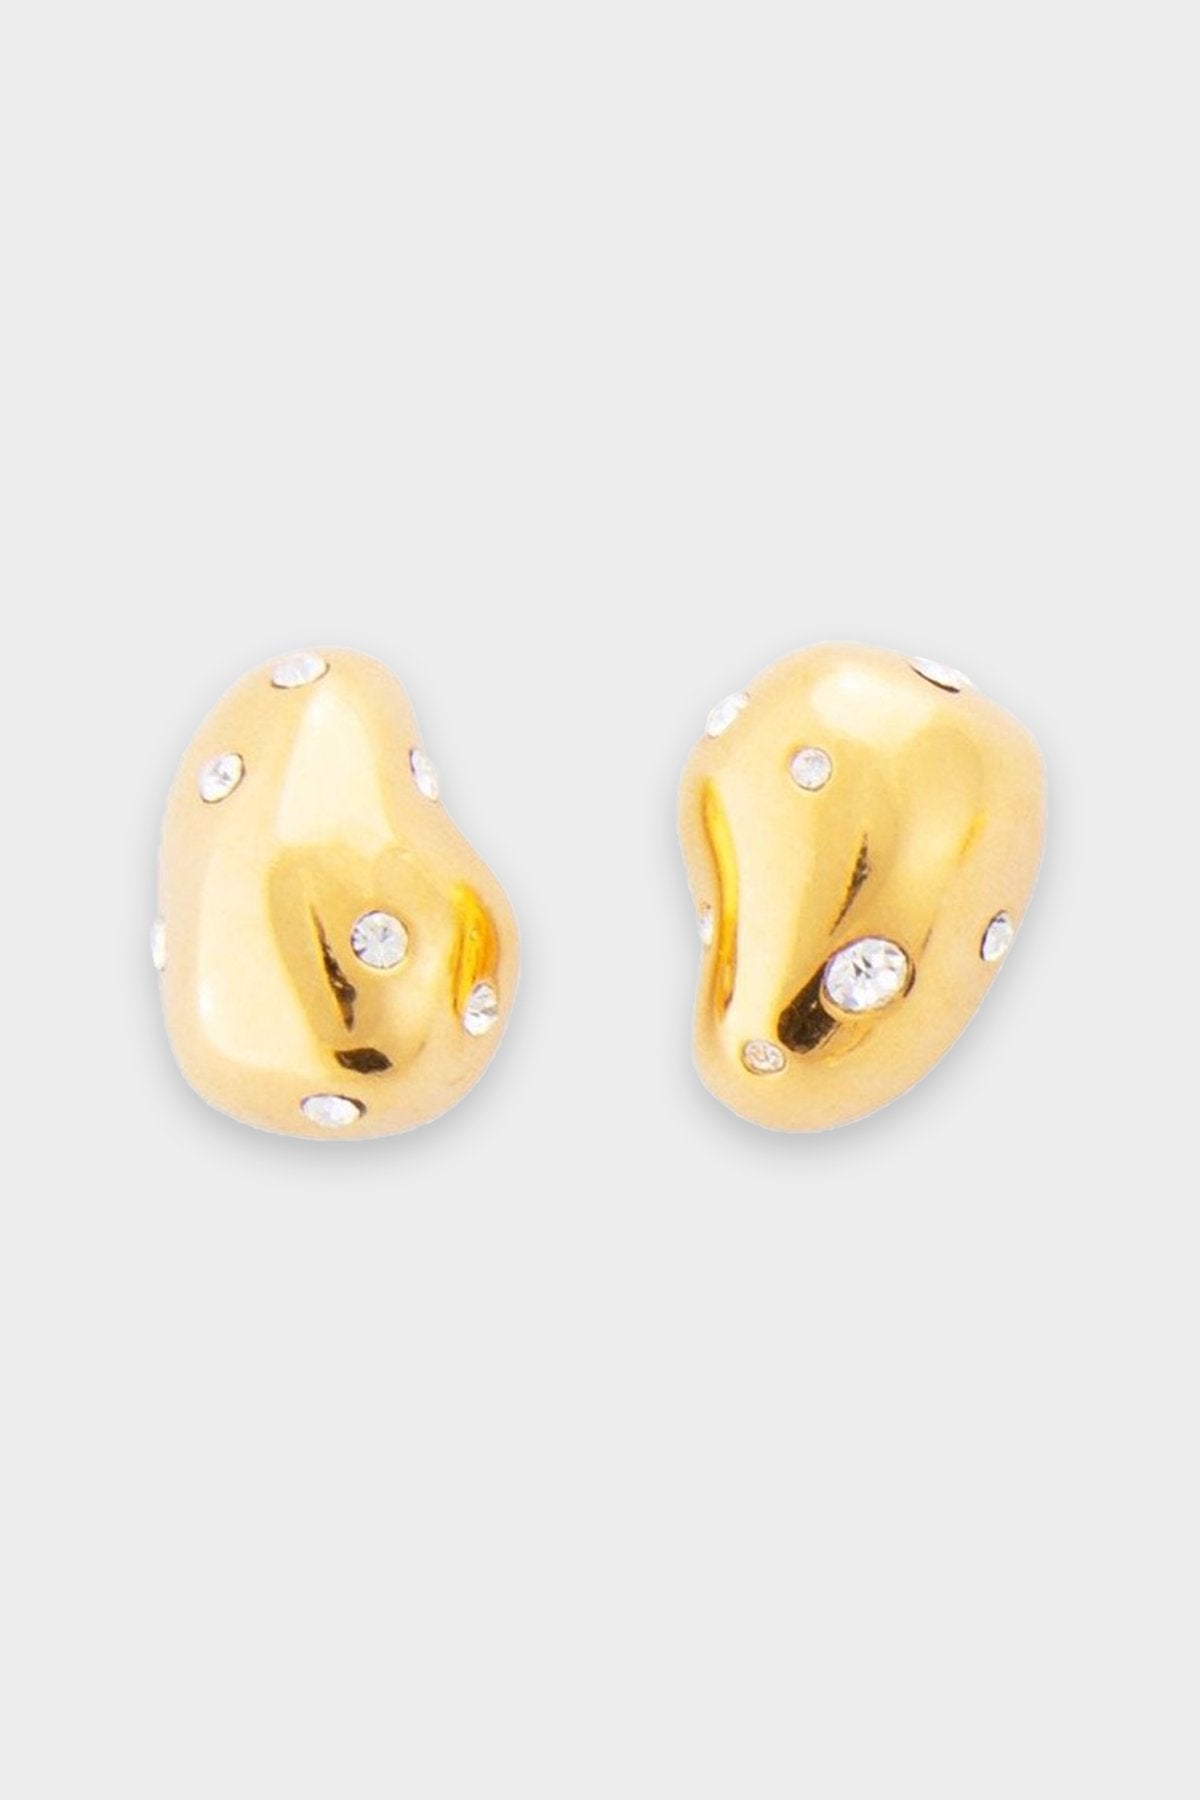 Nucleus Stud Earrings in Gold - shop-olivia.com